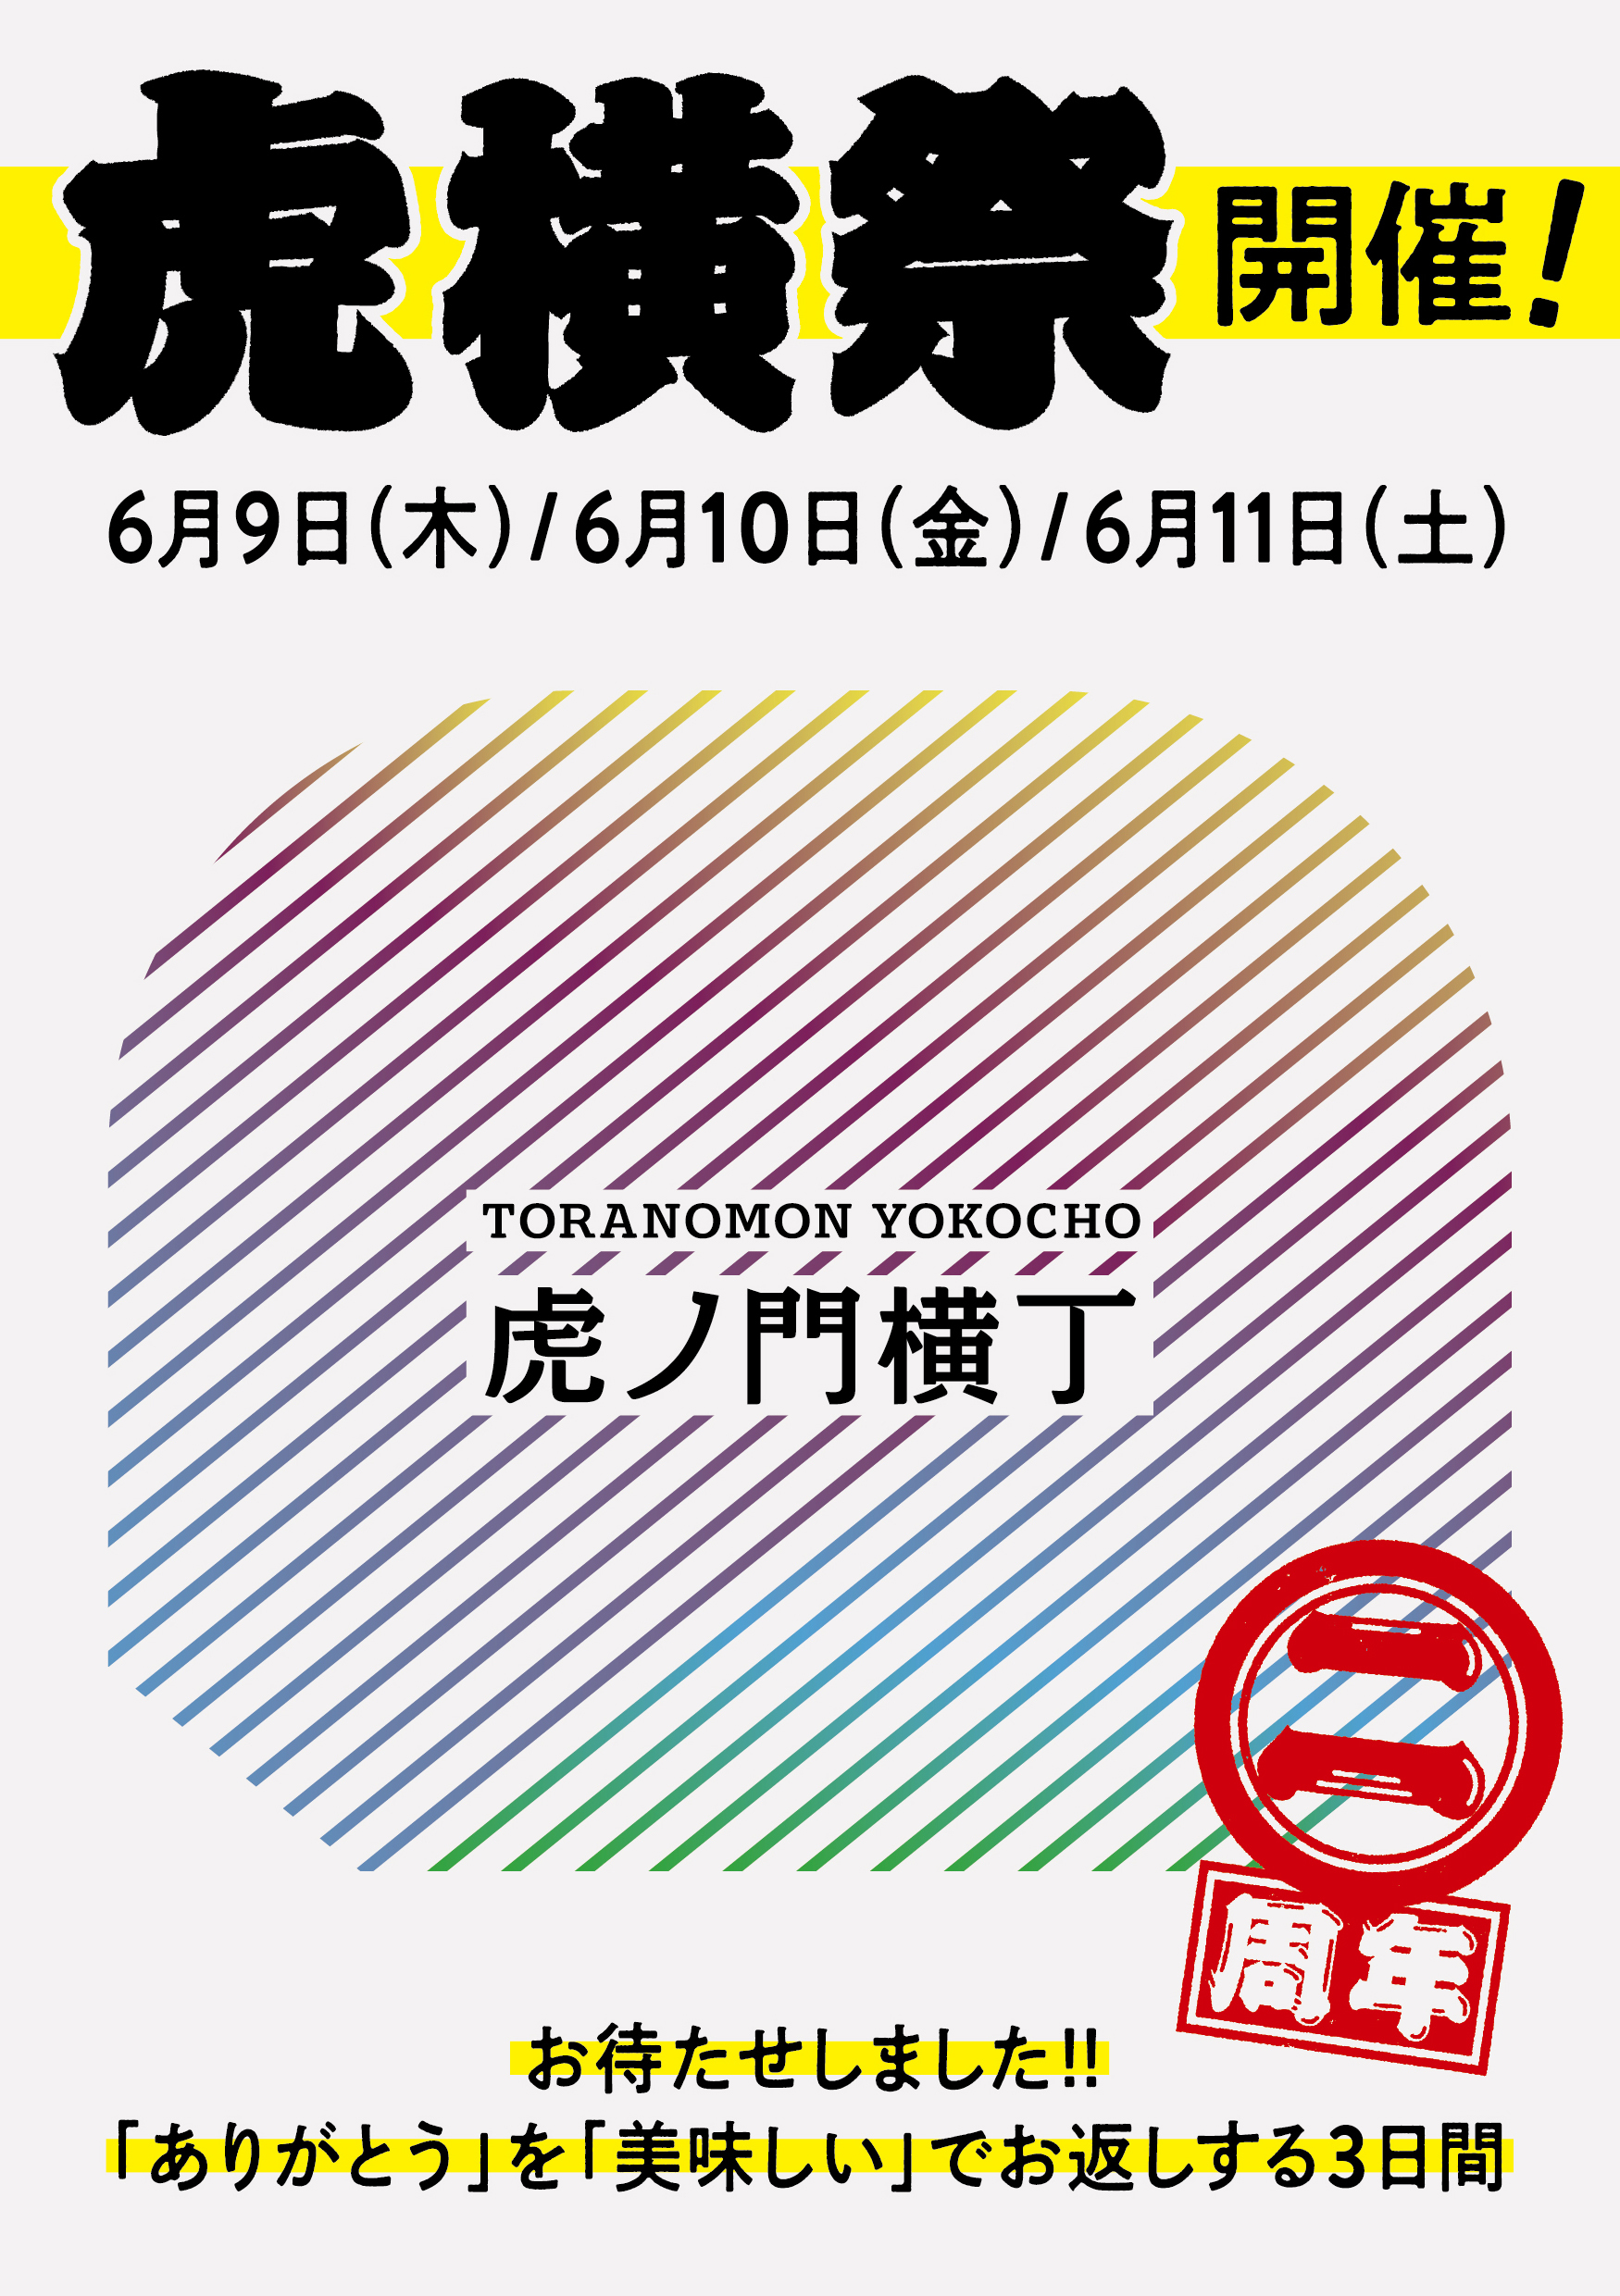 2022/6/11(SAT) 「虎横祭」虎ノ門横丁の２周年記念イベント